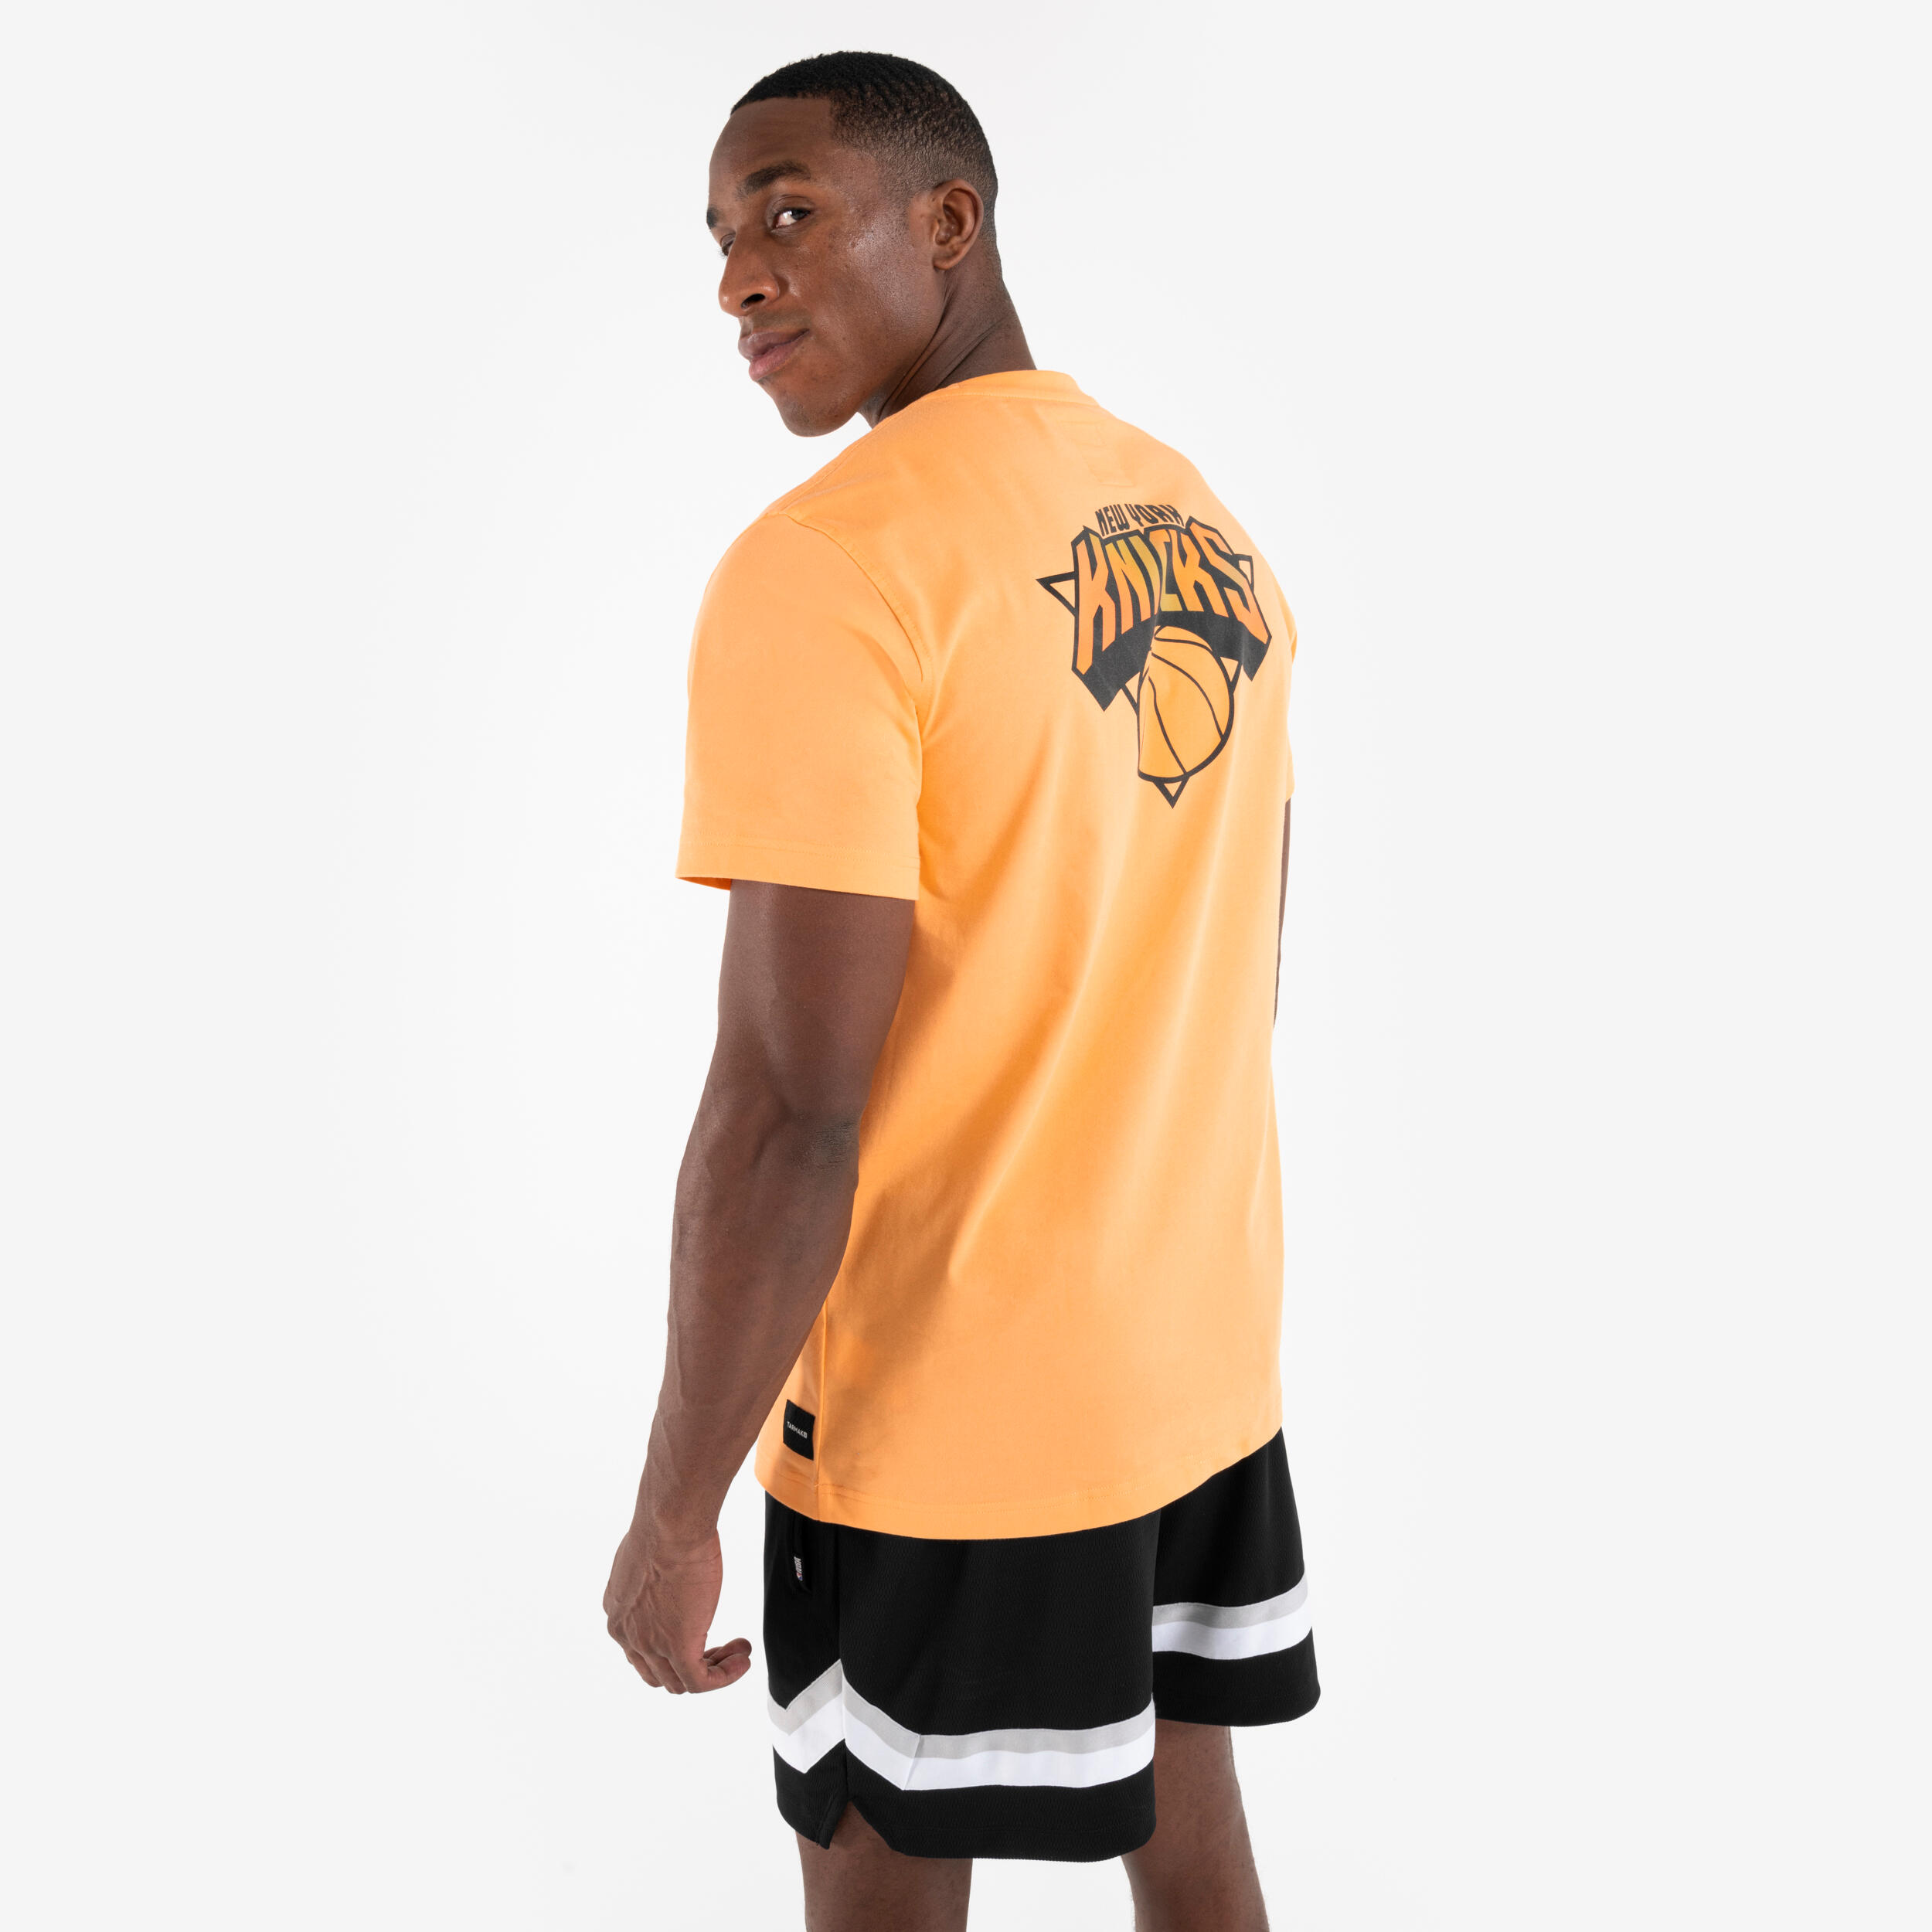 Unisex Basketball T-Shirt 900 AD - NBA Knicks/Orange 5/8